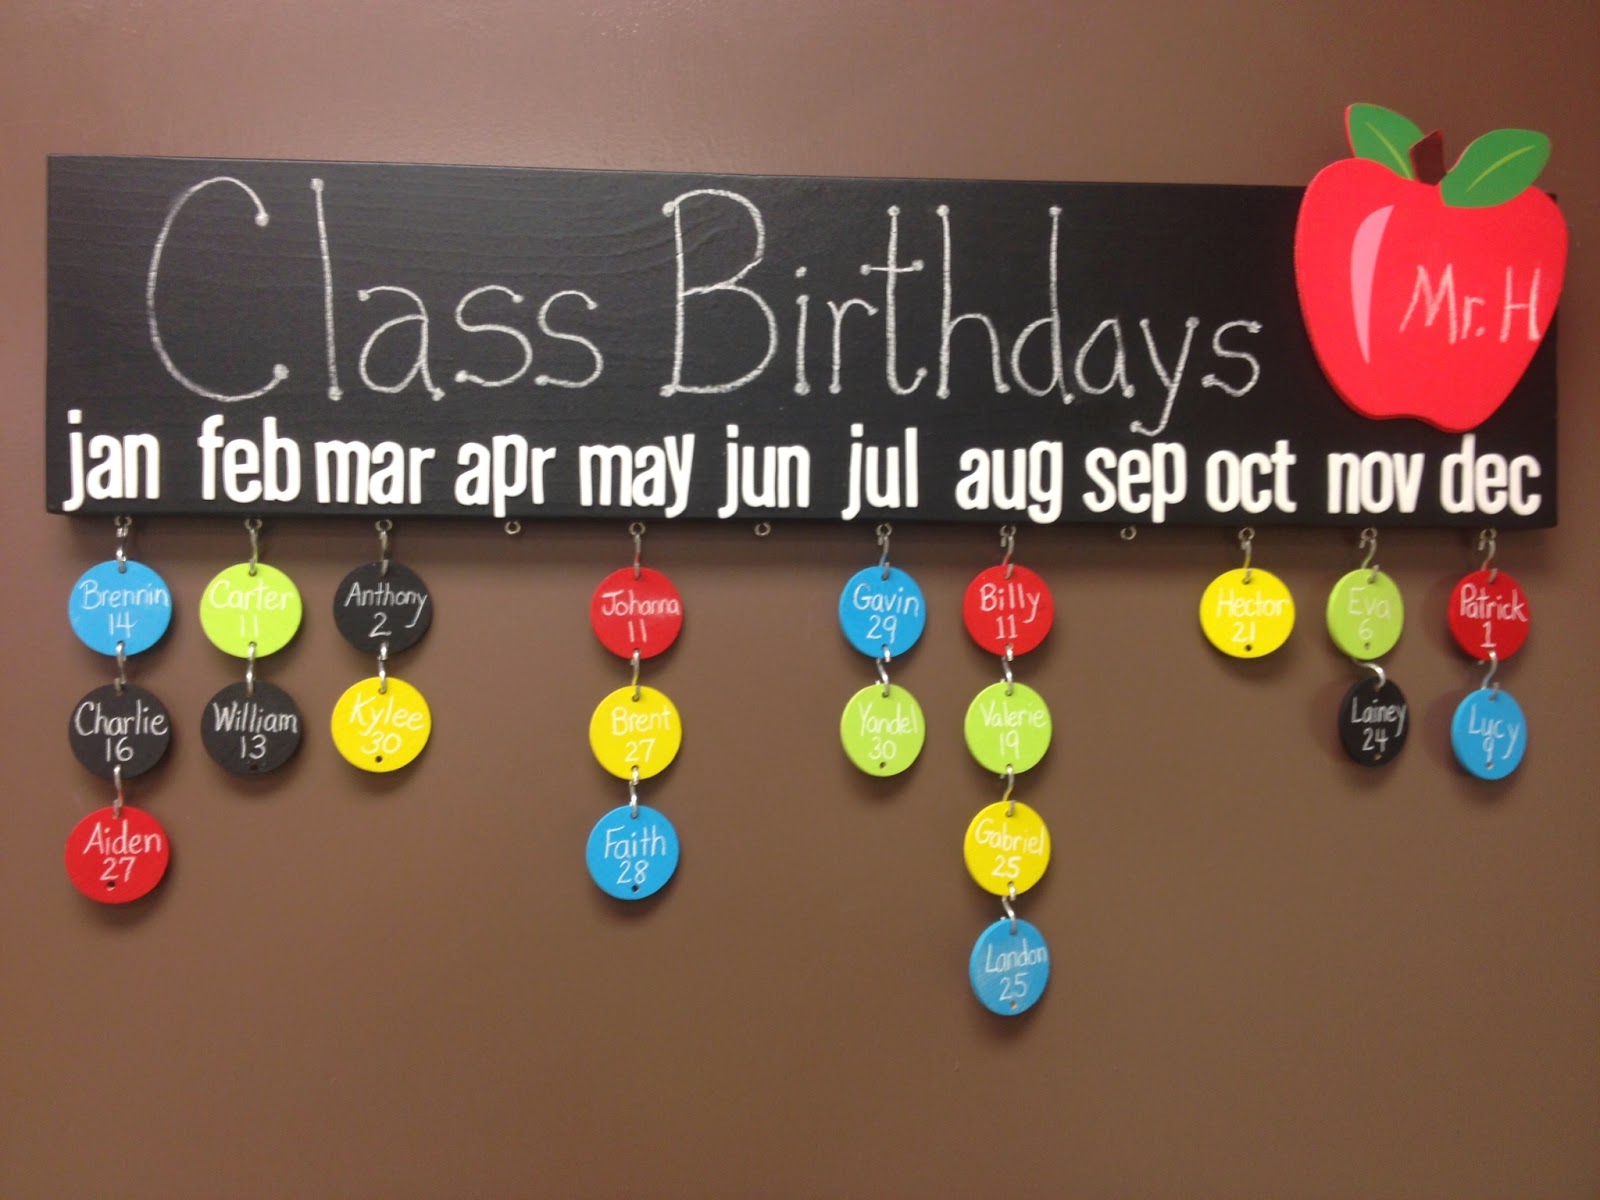 Mr. H's Blog: Classroom 2014-2015